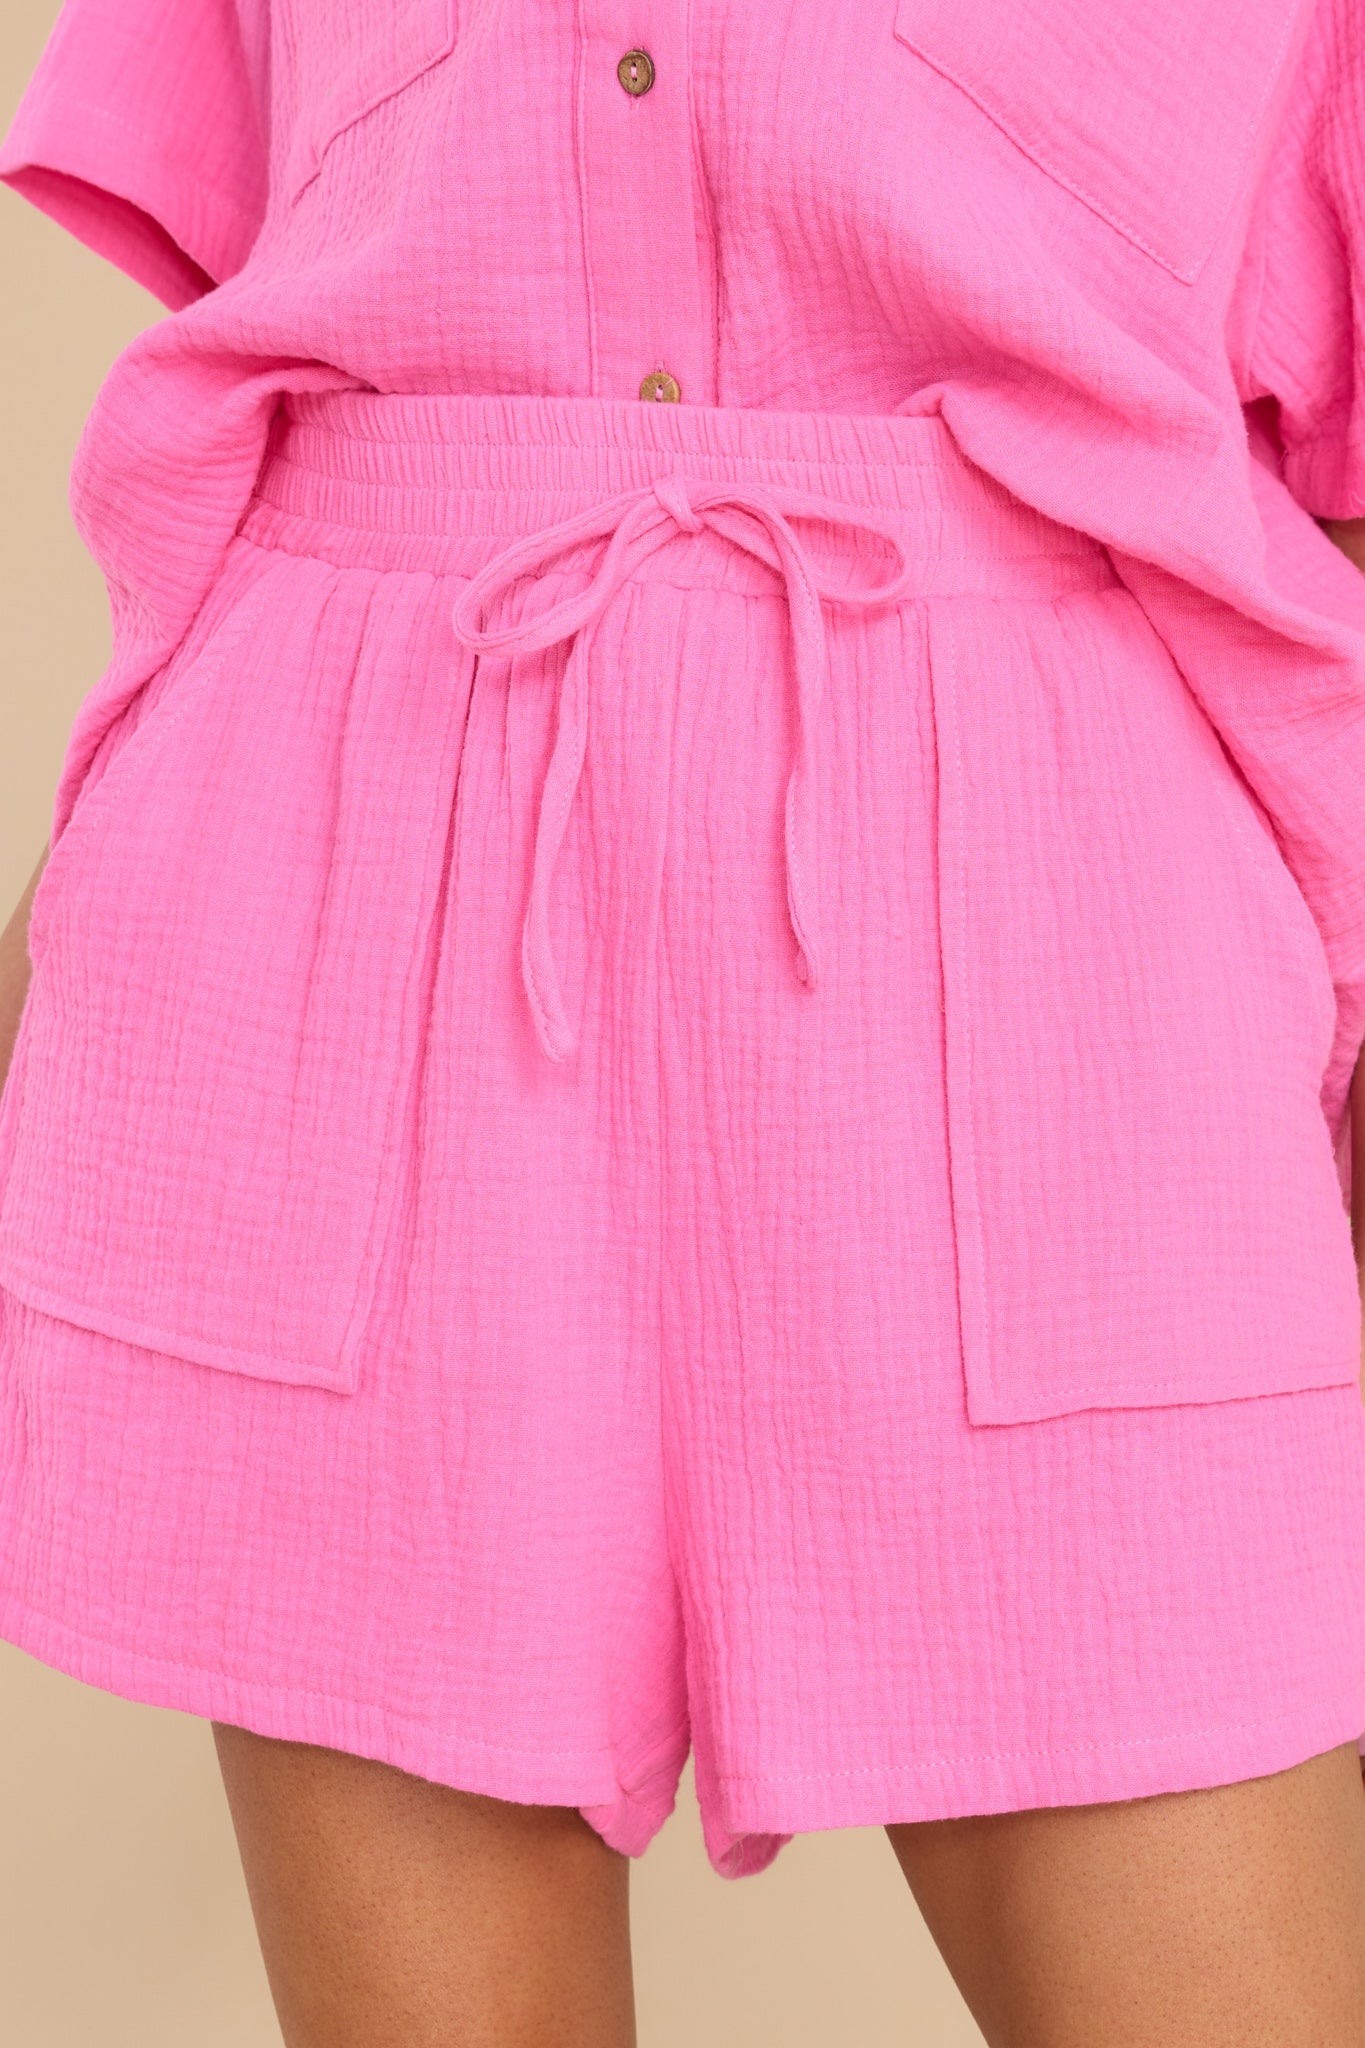 Infinite Bliss Pink Gauze Shorts - Red Dress